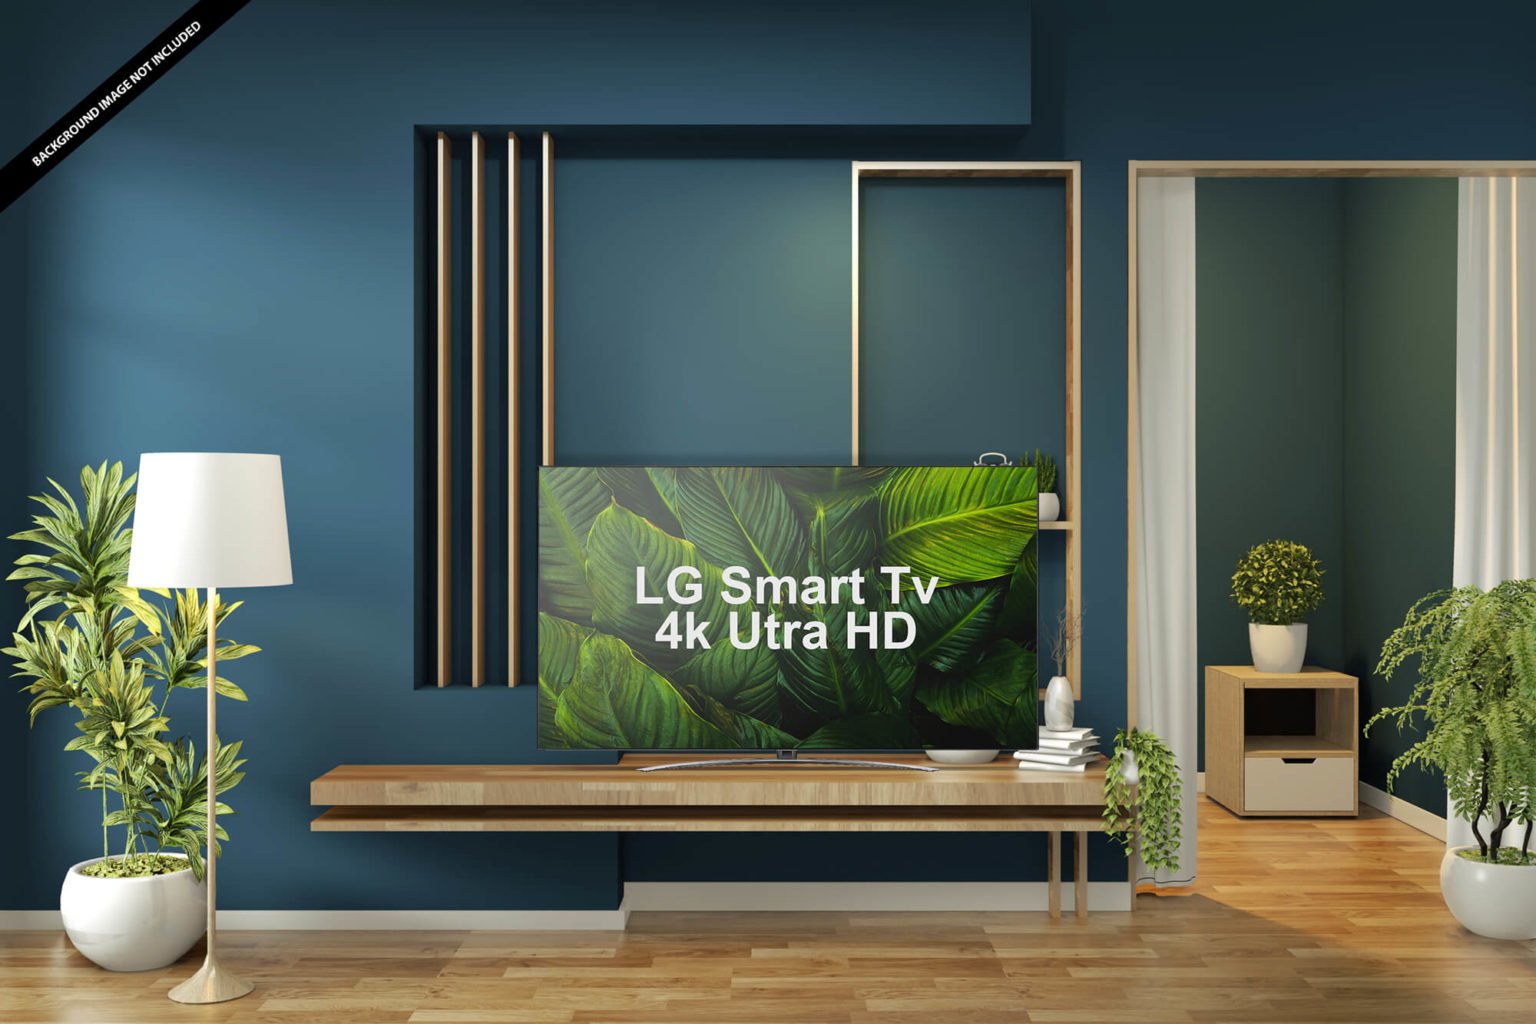 Free LG Smart TV Mockup PSD Template | Mockup Den